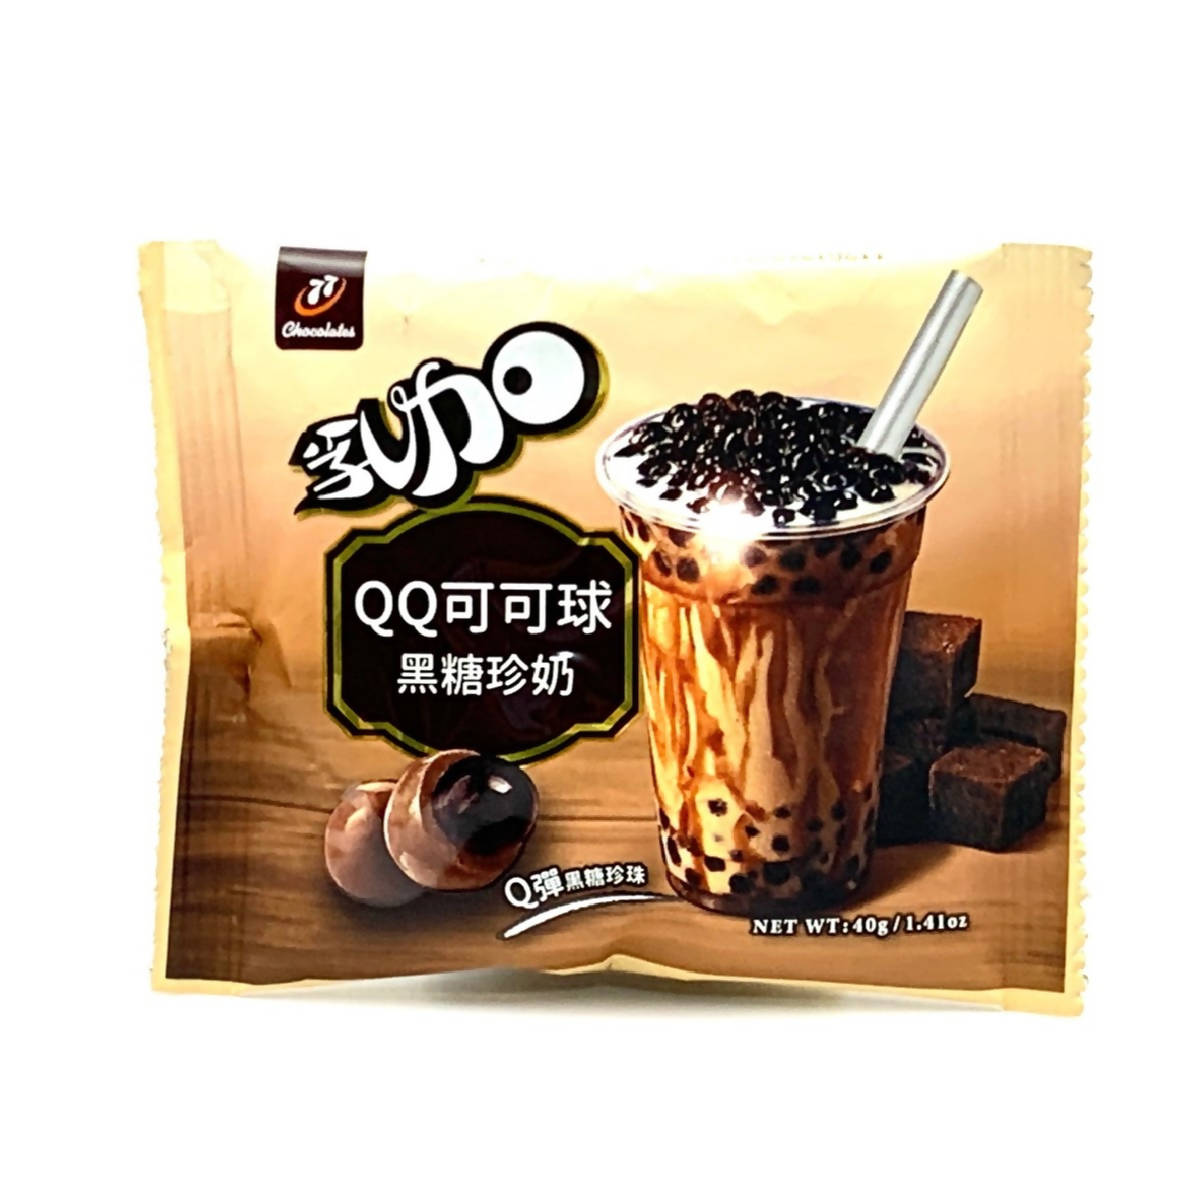 Taiwan Direct Mail【77 Milk Plus】HUNYA FOODS QQ Cocoa Balls (Brown Sugar Milk) 40g/bag 